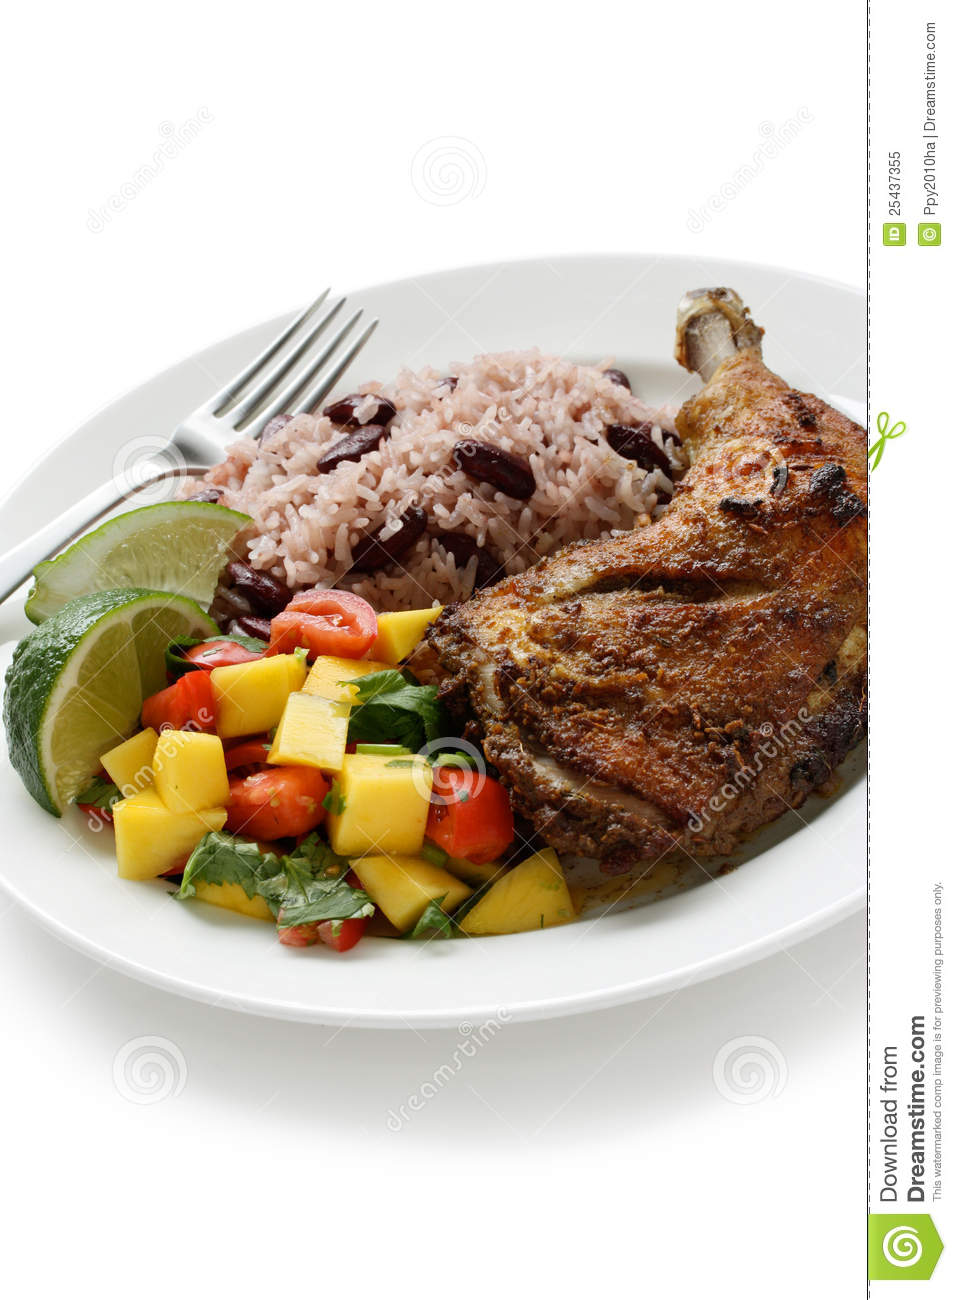 Jerk Chicken Plate Jamaican Food Royalty Free Stock Photo   Image